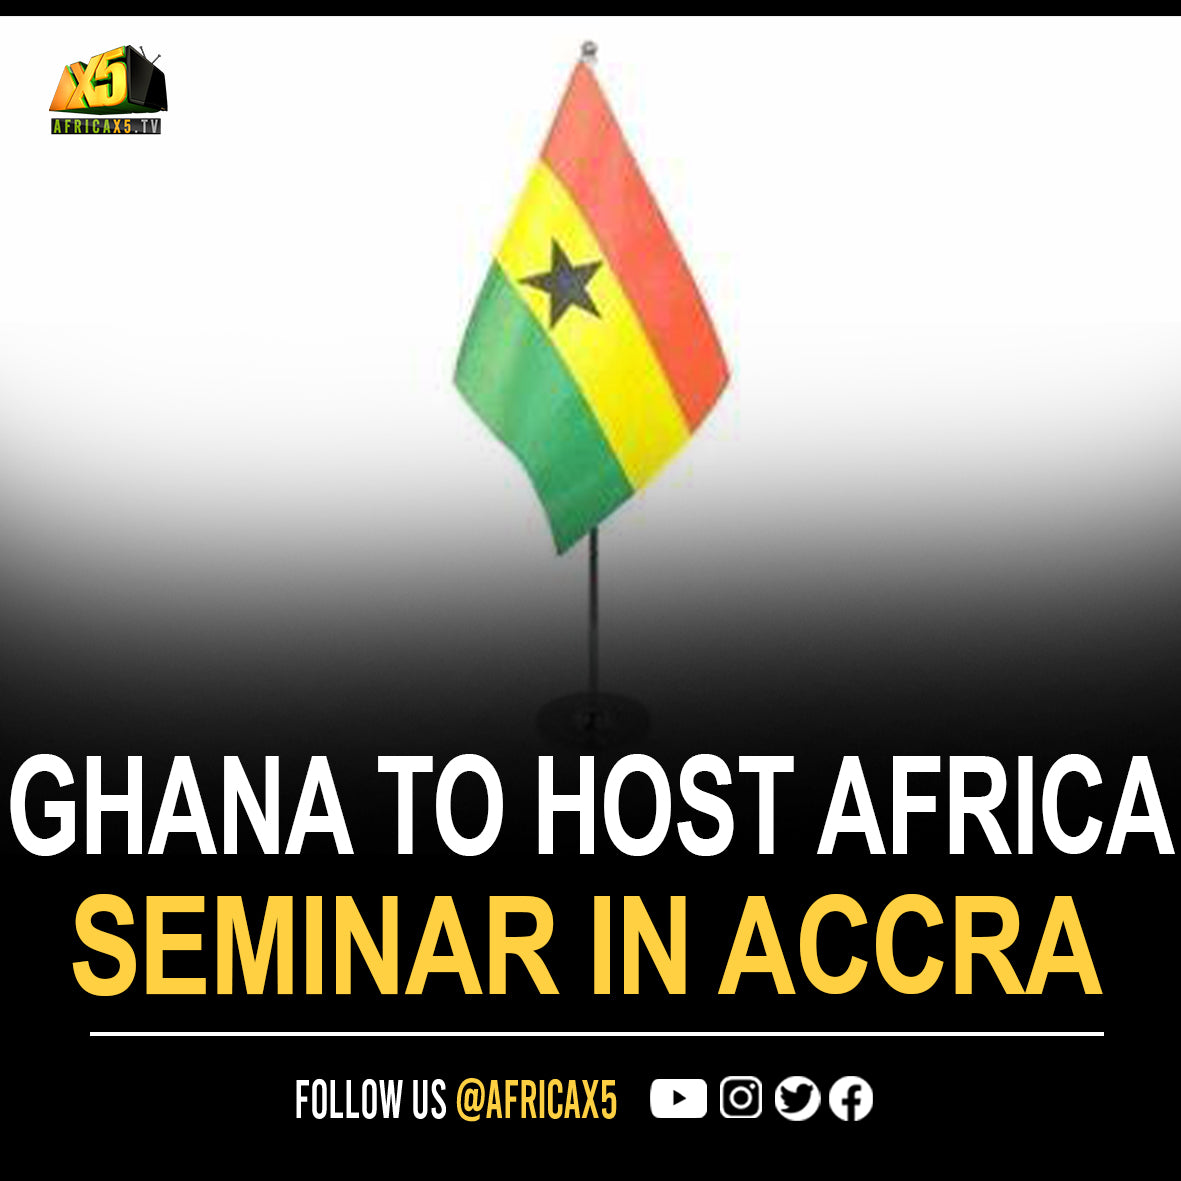 Eckankar Ghana to host African seminar in Accra